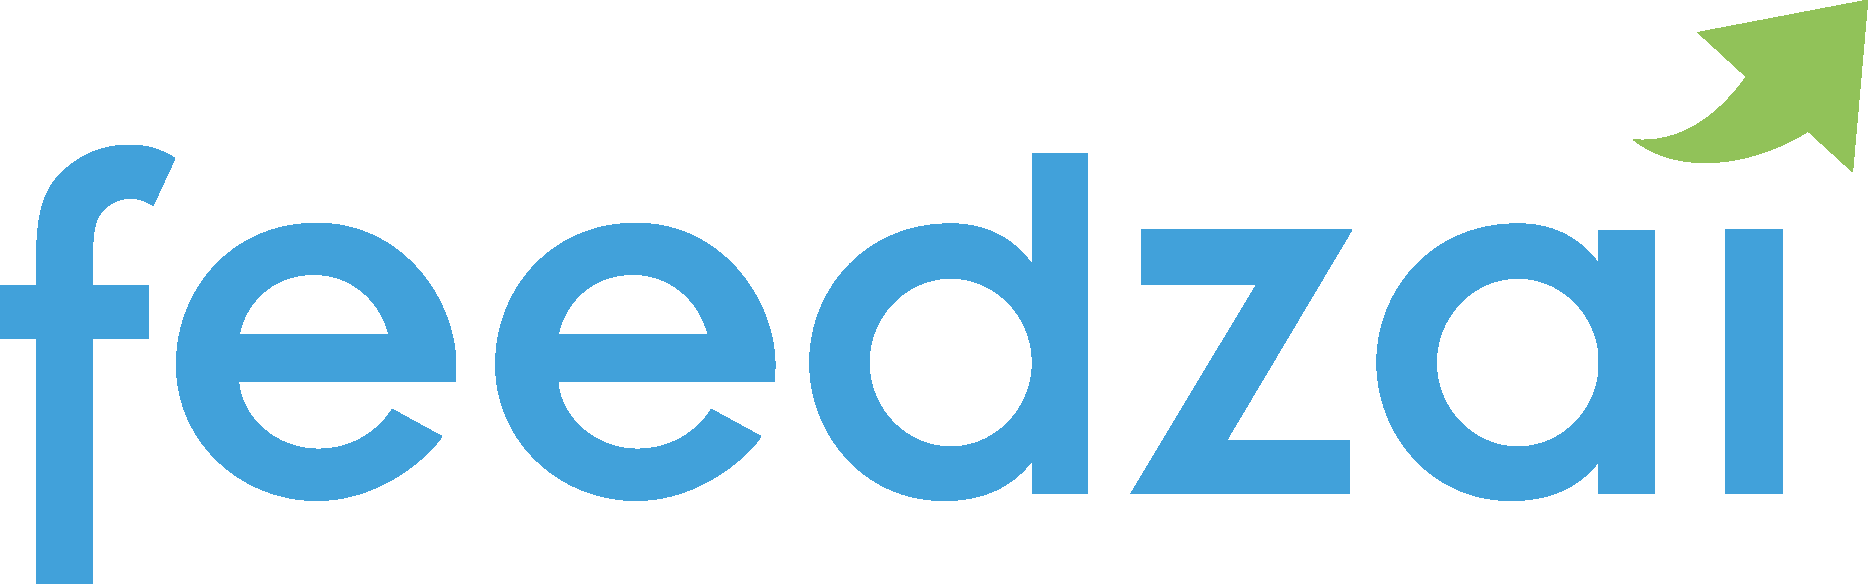 FeedZai Logo - Feedzai Logo Downloads Graphic Design Materials